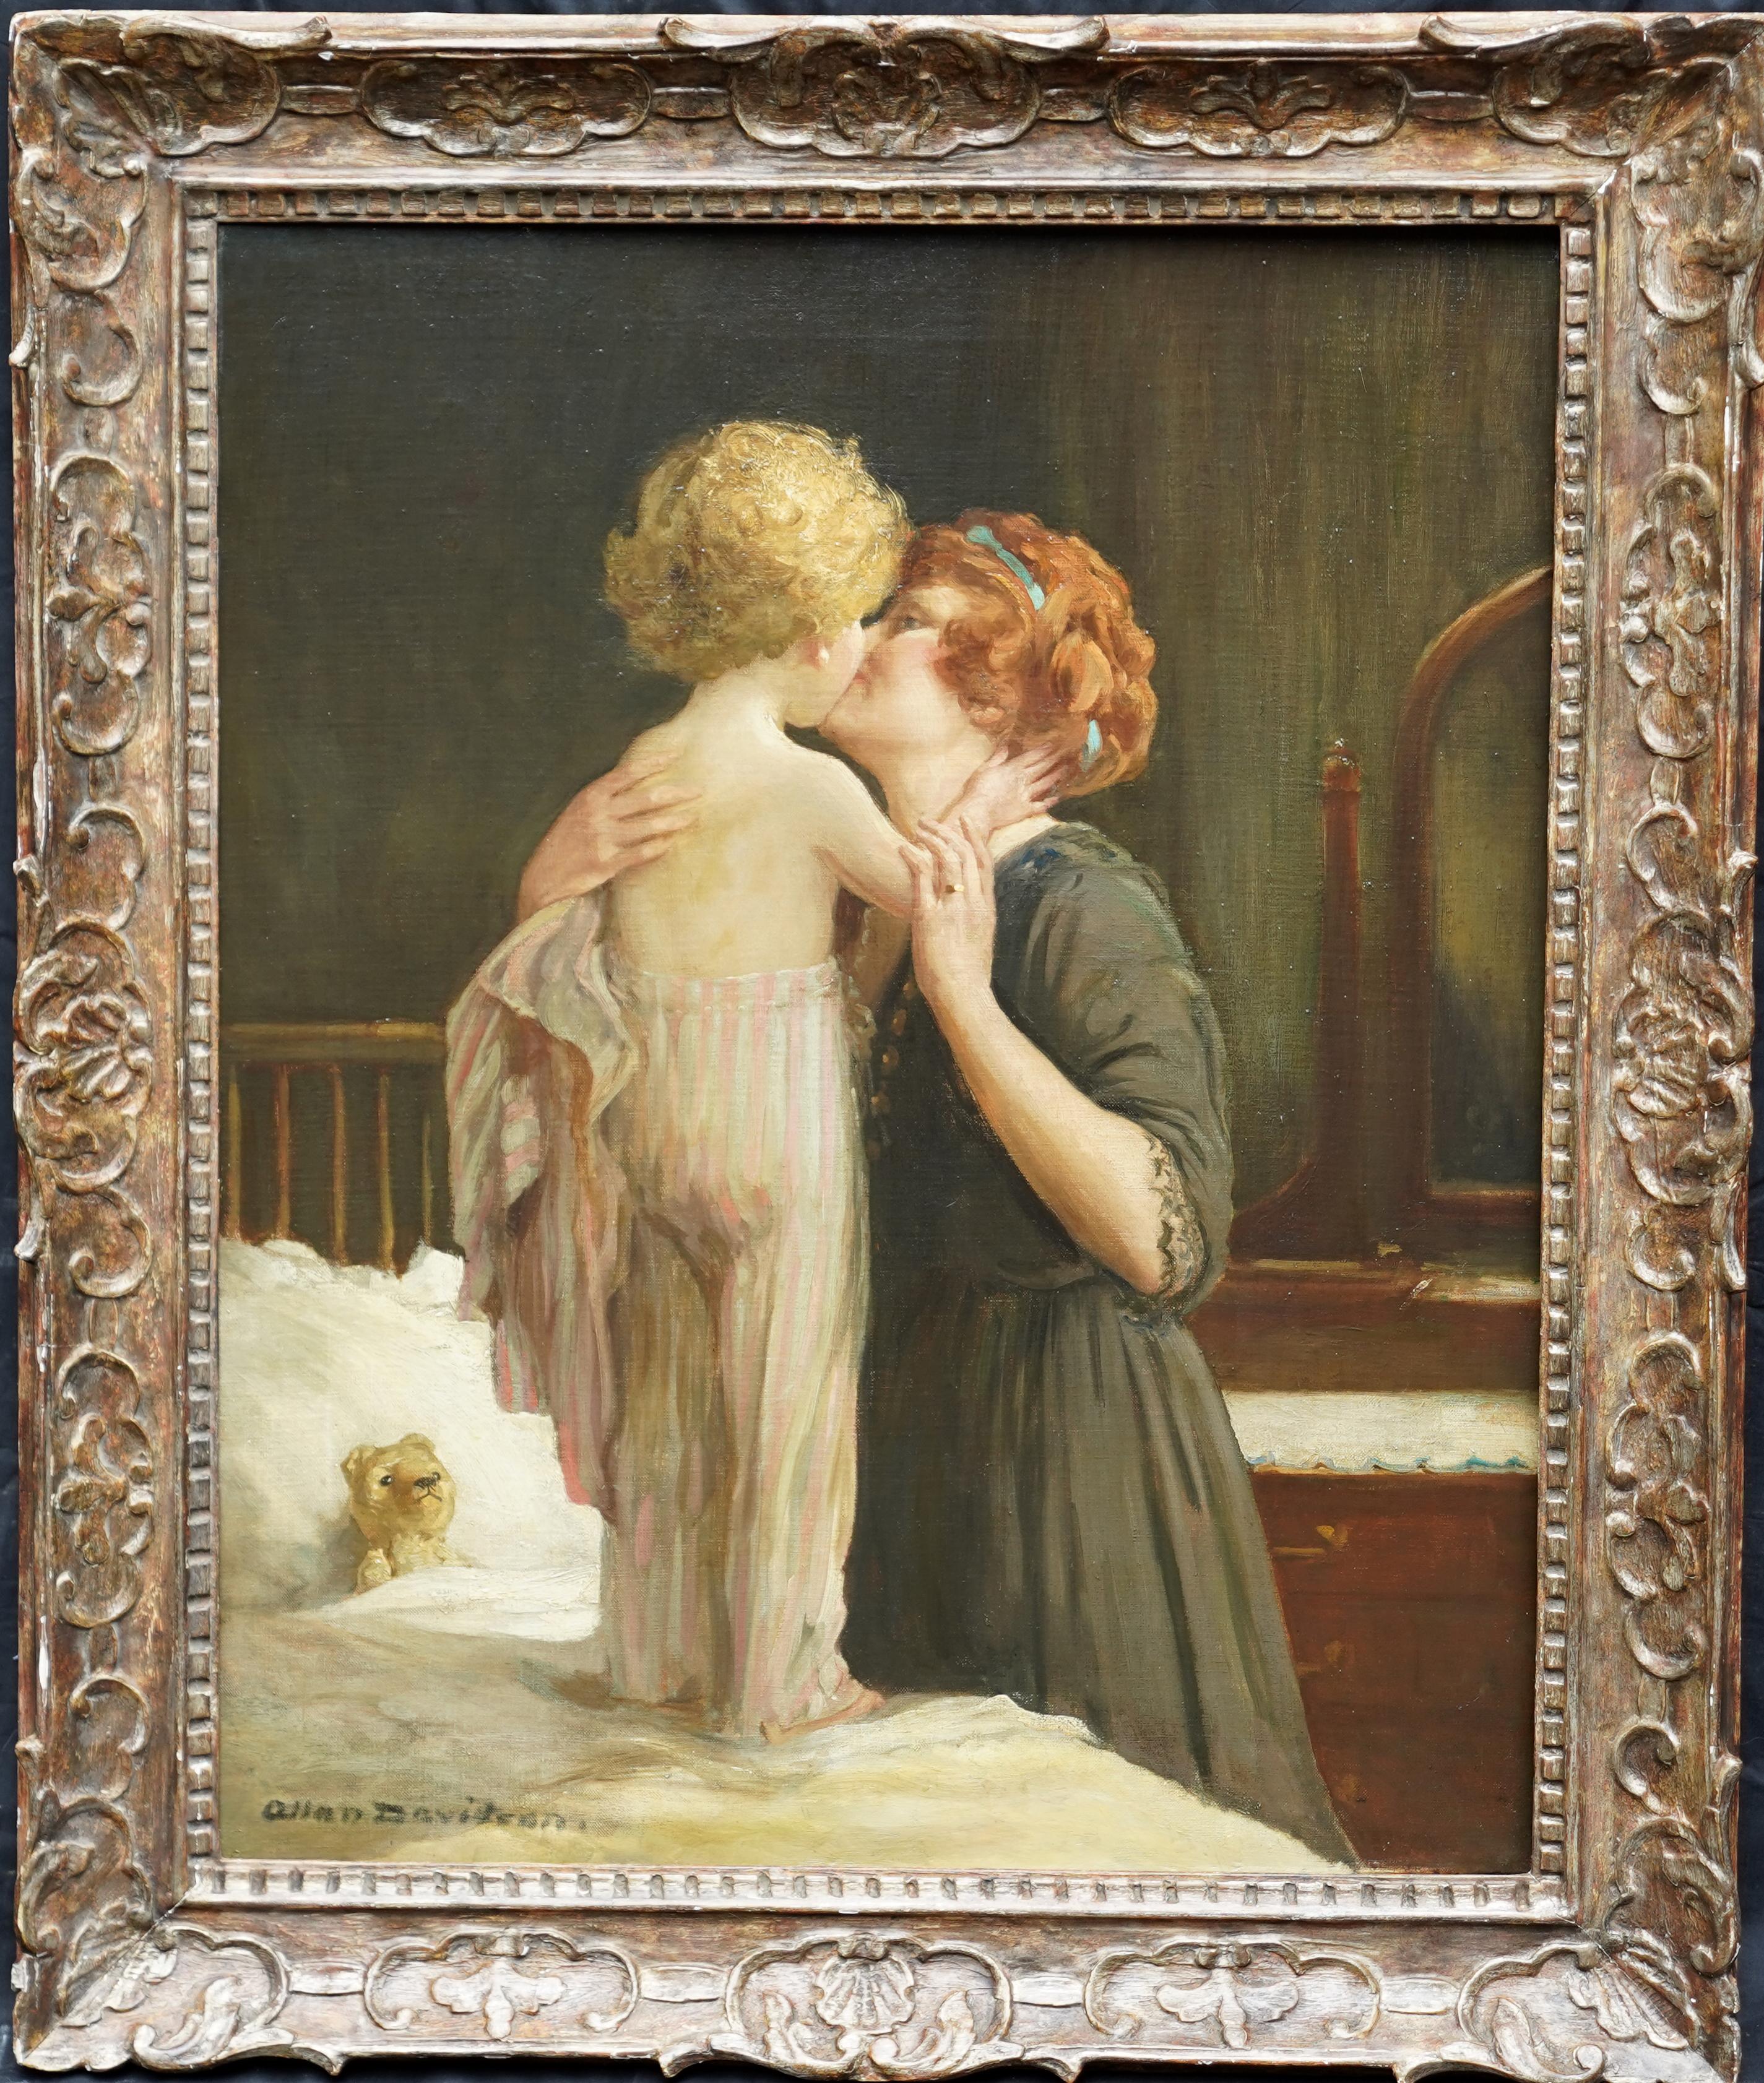 Mother's Love - Bedtime - British 20's art mother child portrait oil painting